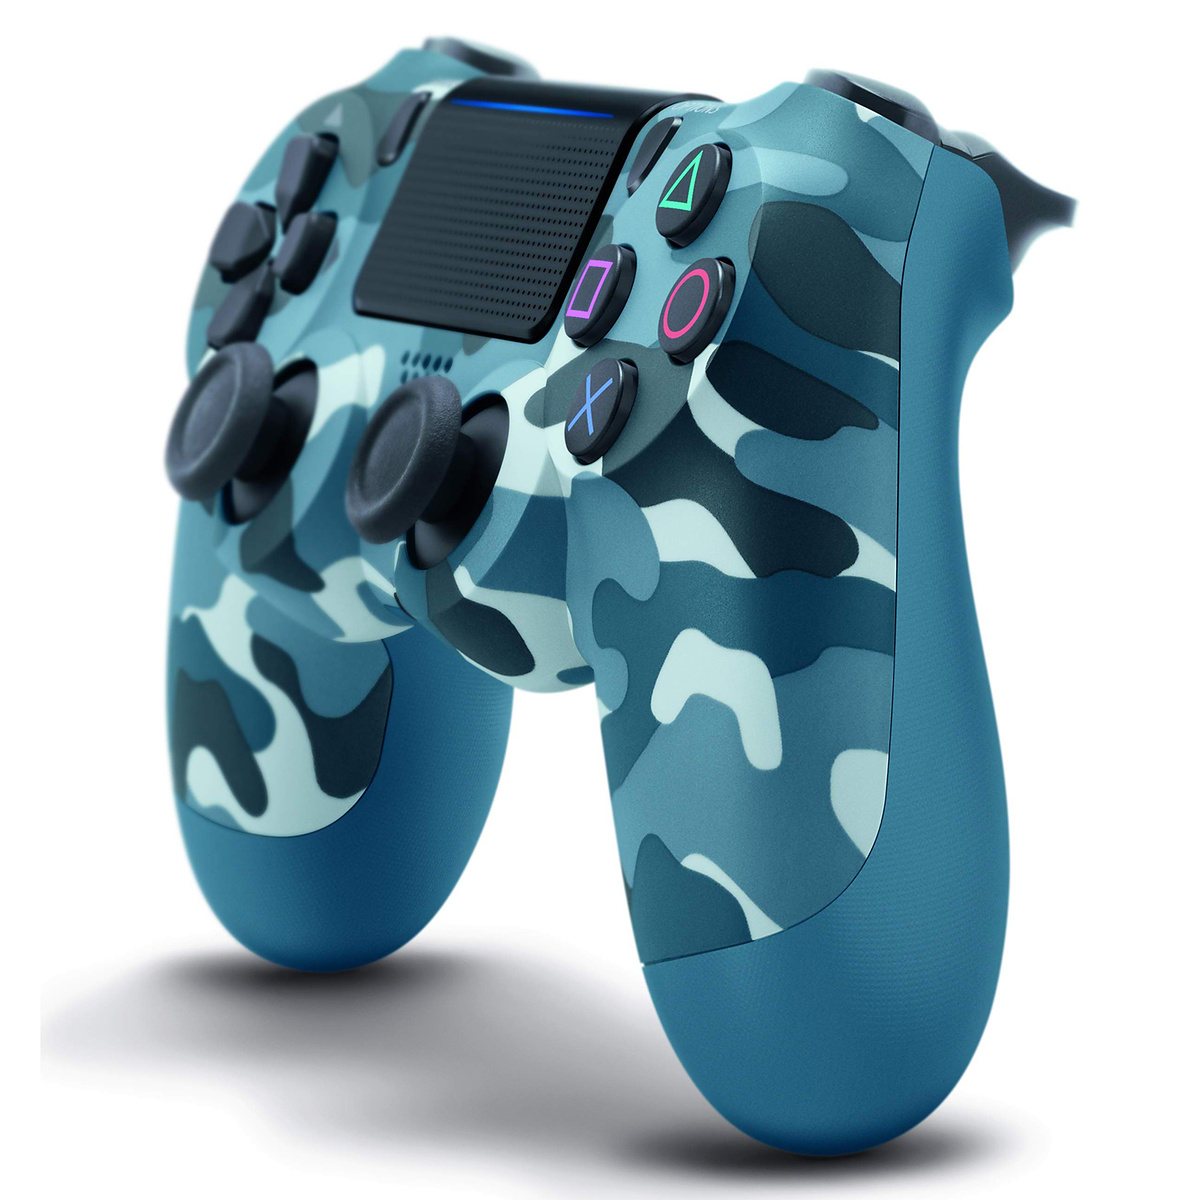 PS4 trådlös handkontroll, camo blå